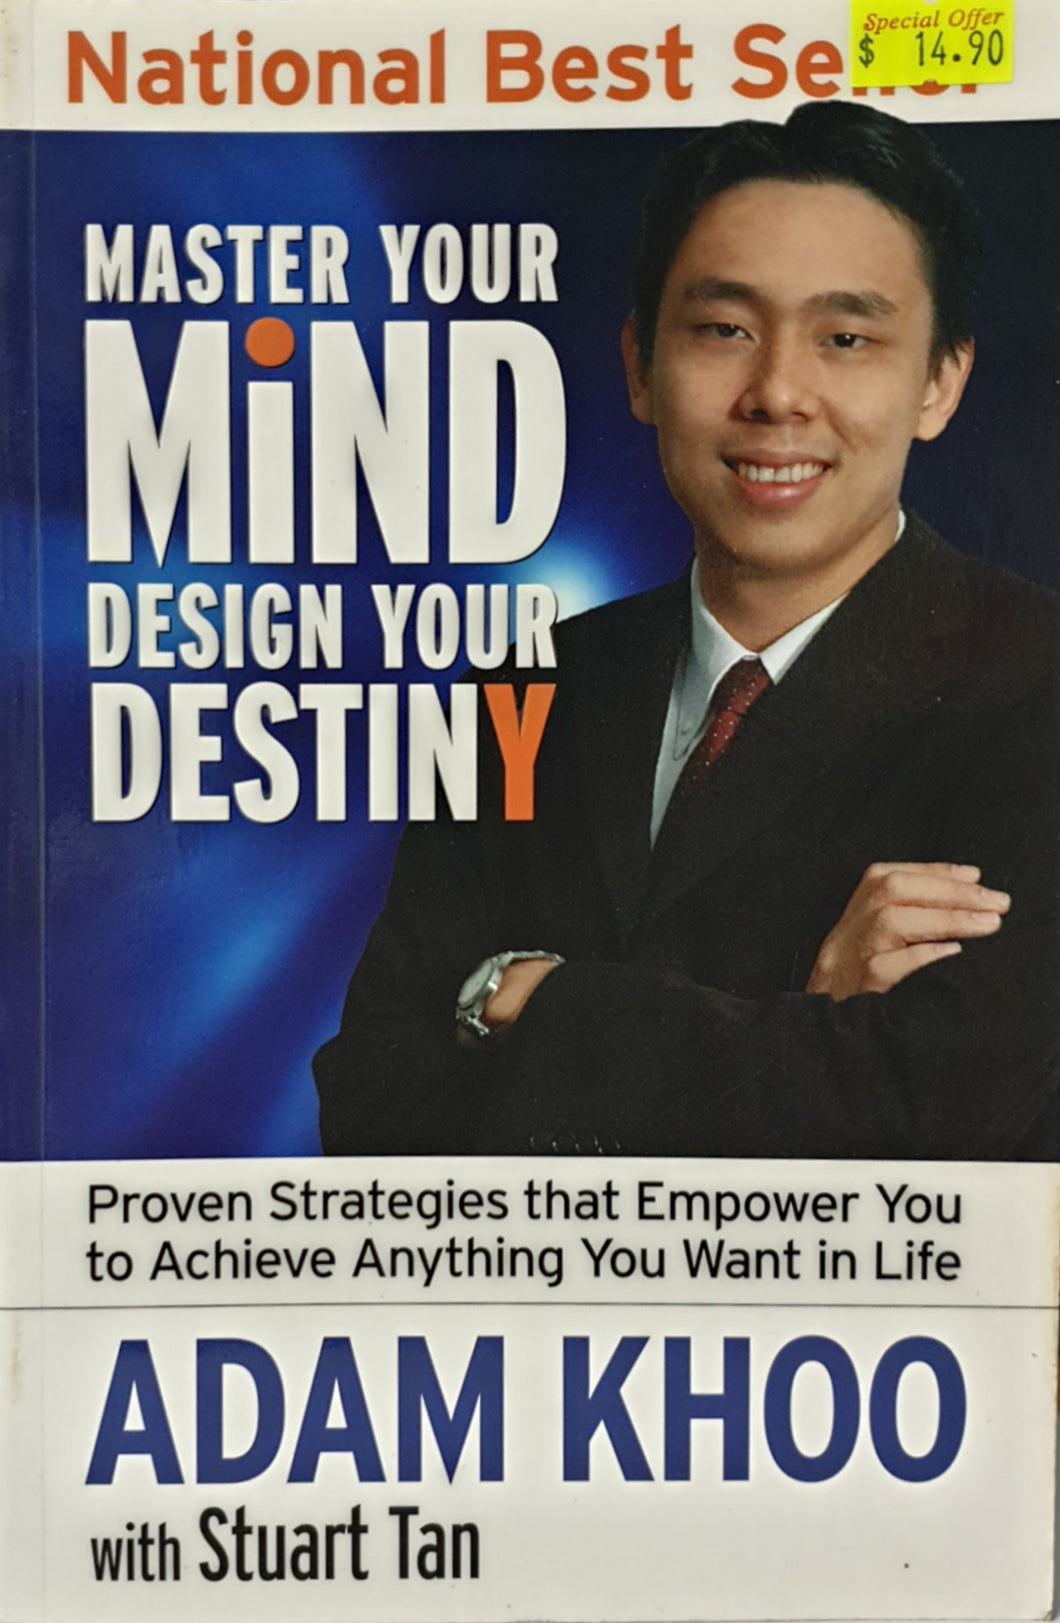 Master Your Mind Design Your Destiny - Adam Khoo with Stuart Tan